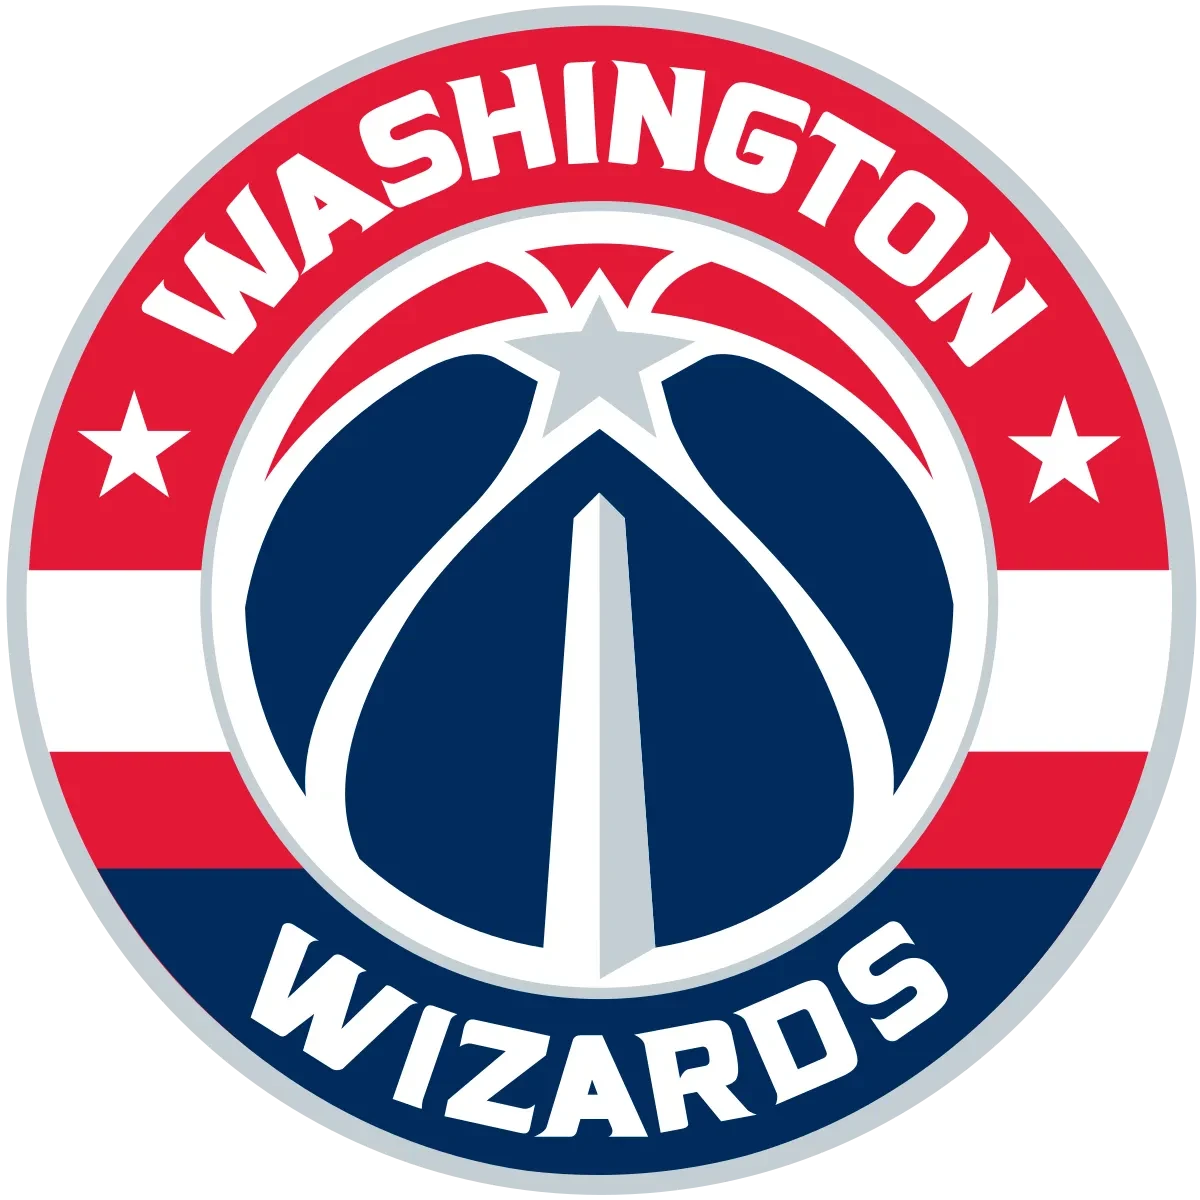 Washington Wizards vs. TBD